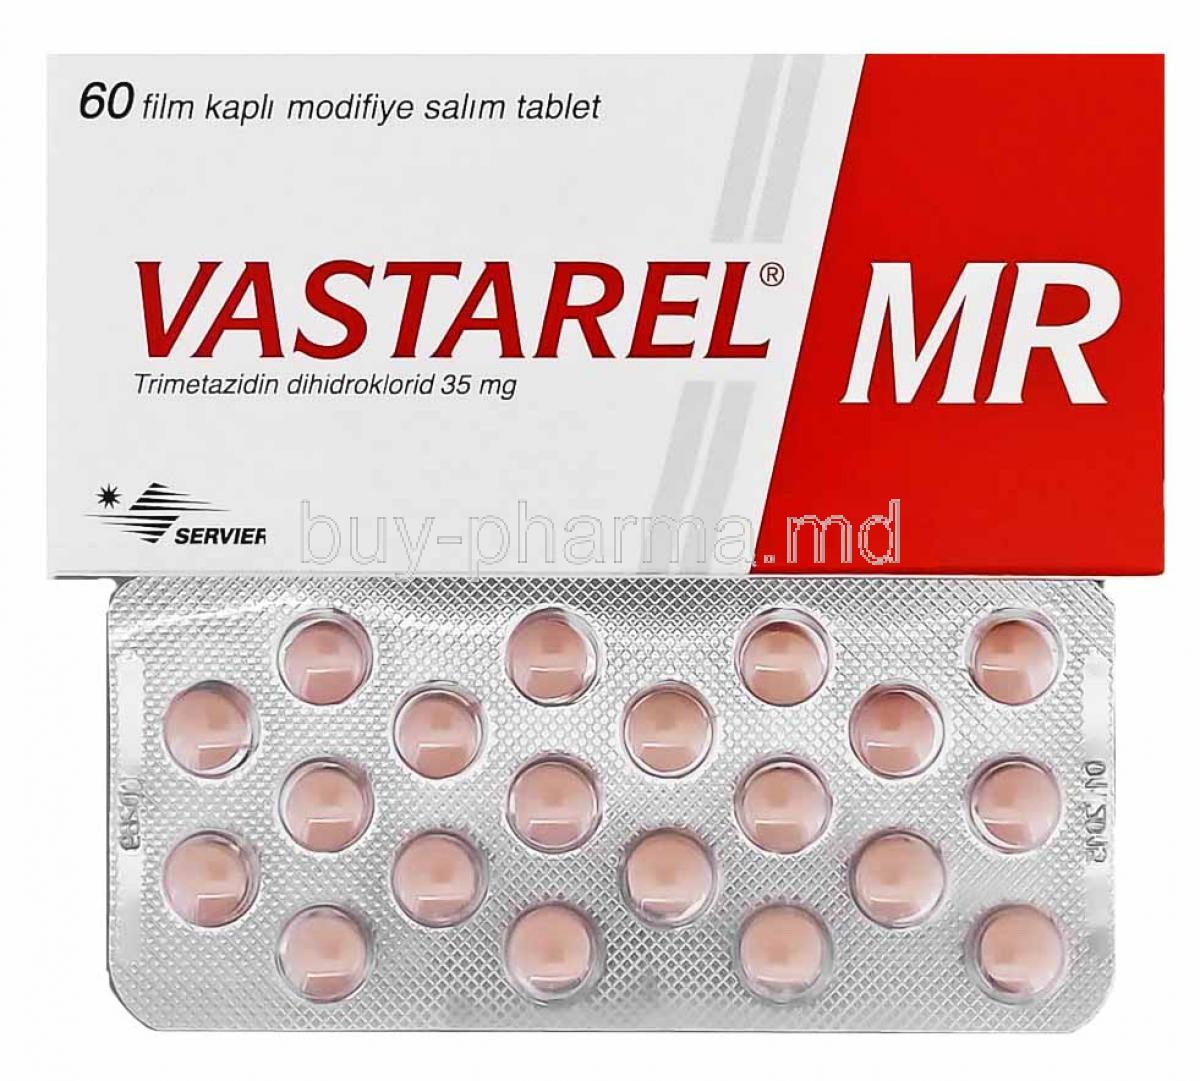 Vastarel MR, Trimetazidine box and tablets